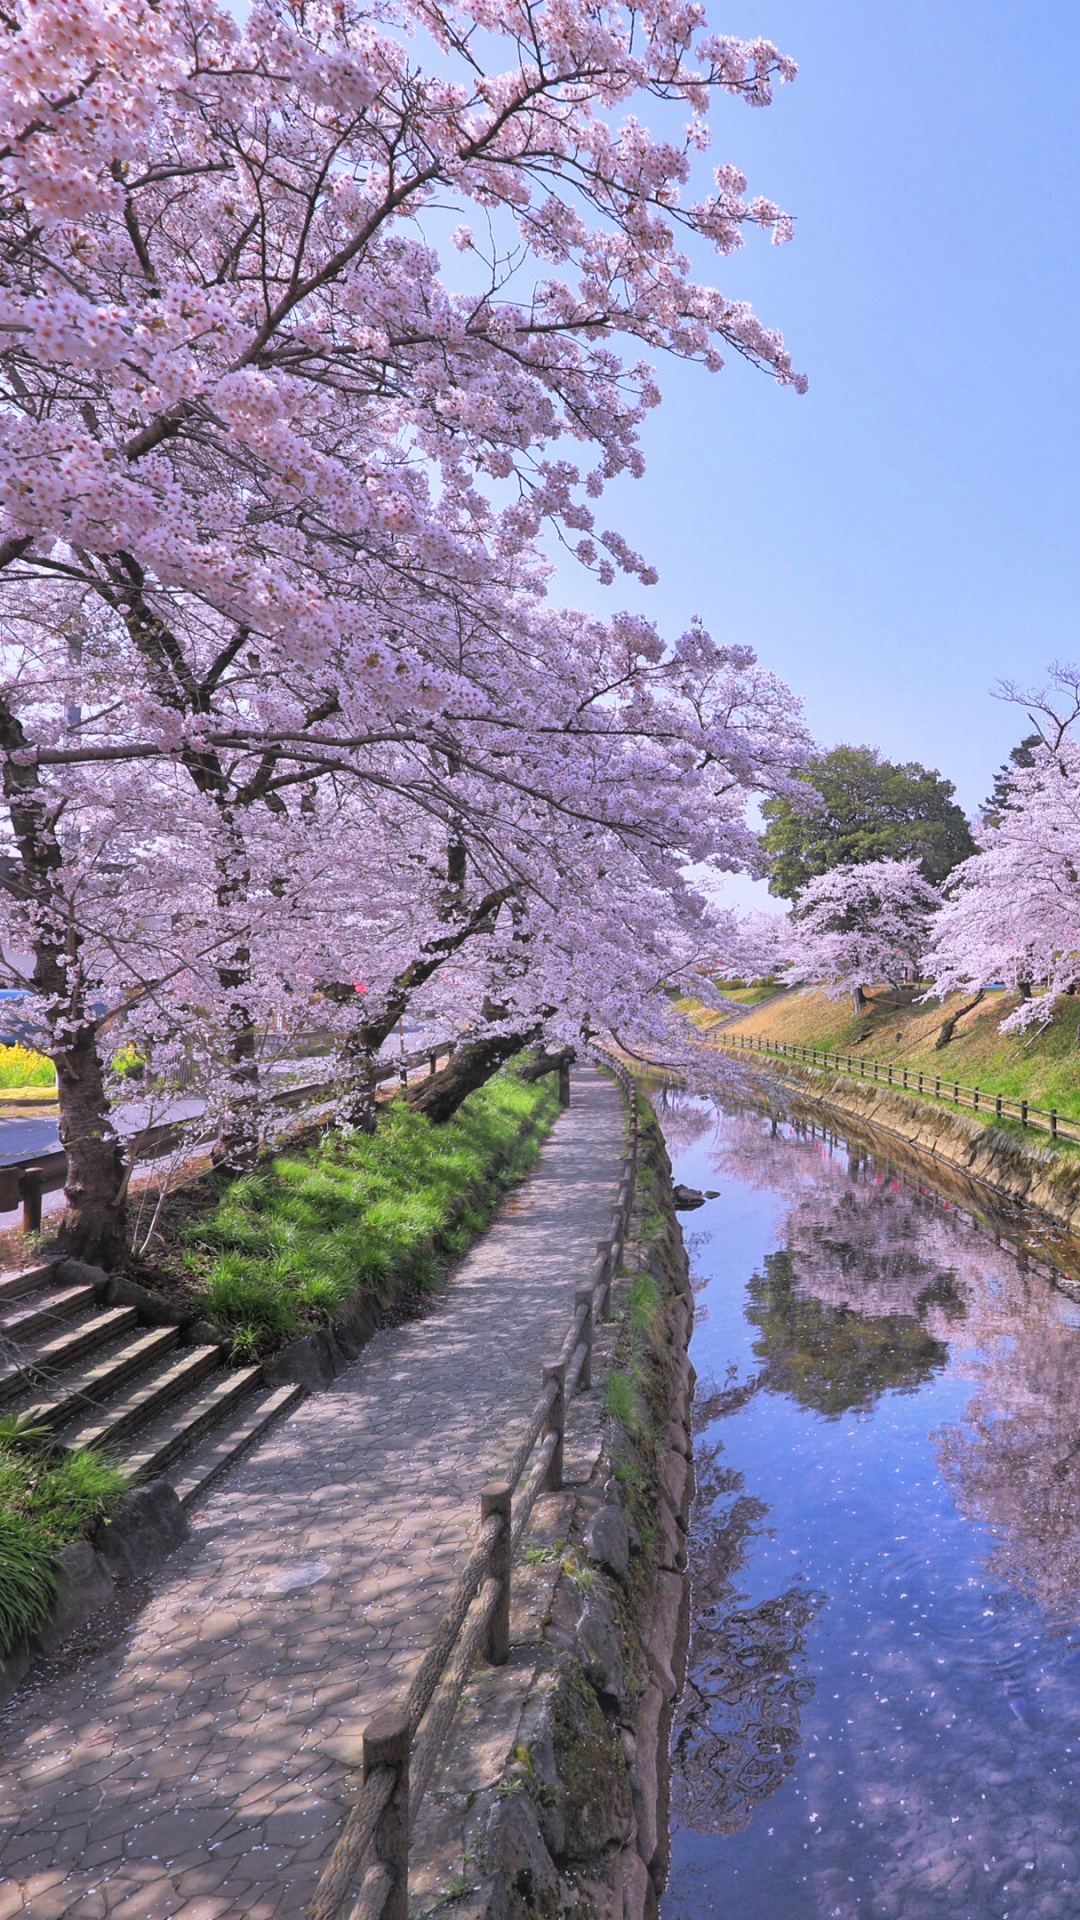 White Cherry Blossom Trees Beside River. Wallpaper in 1080x1920 Resolution